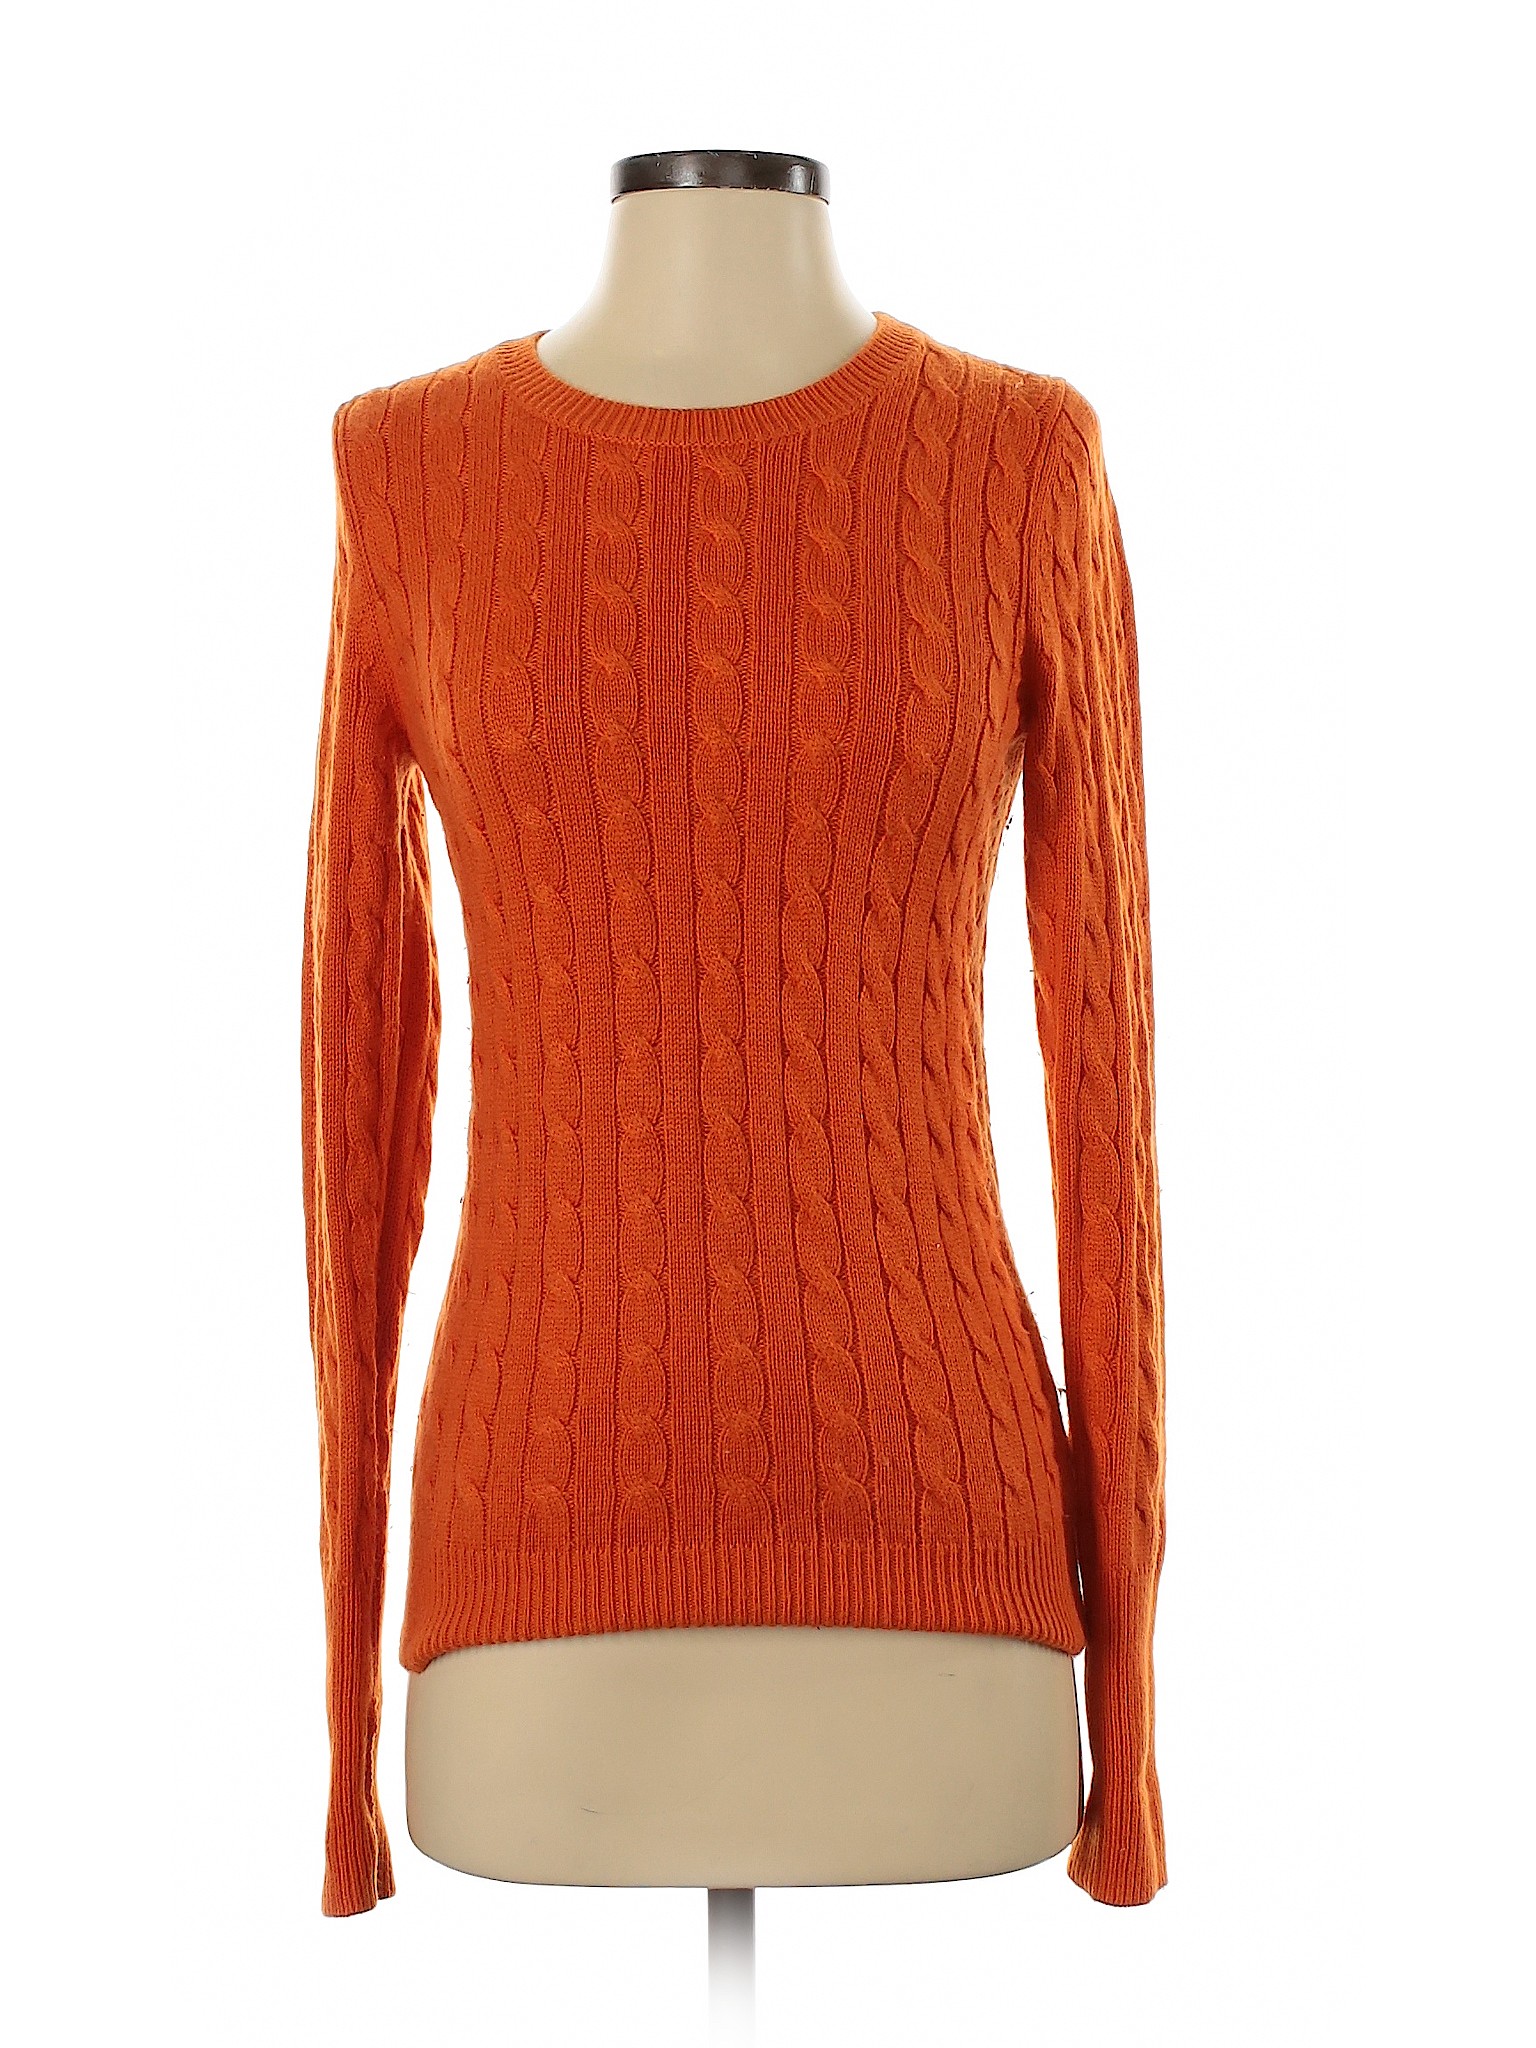 Gap Women Orange Pullover Sweater S | eBay